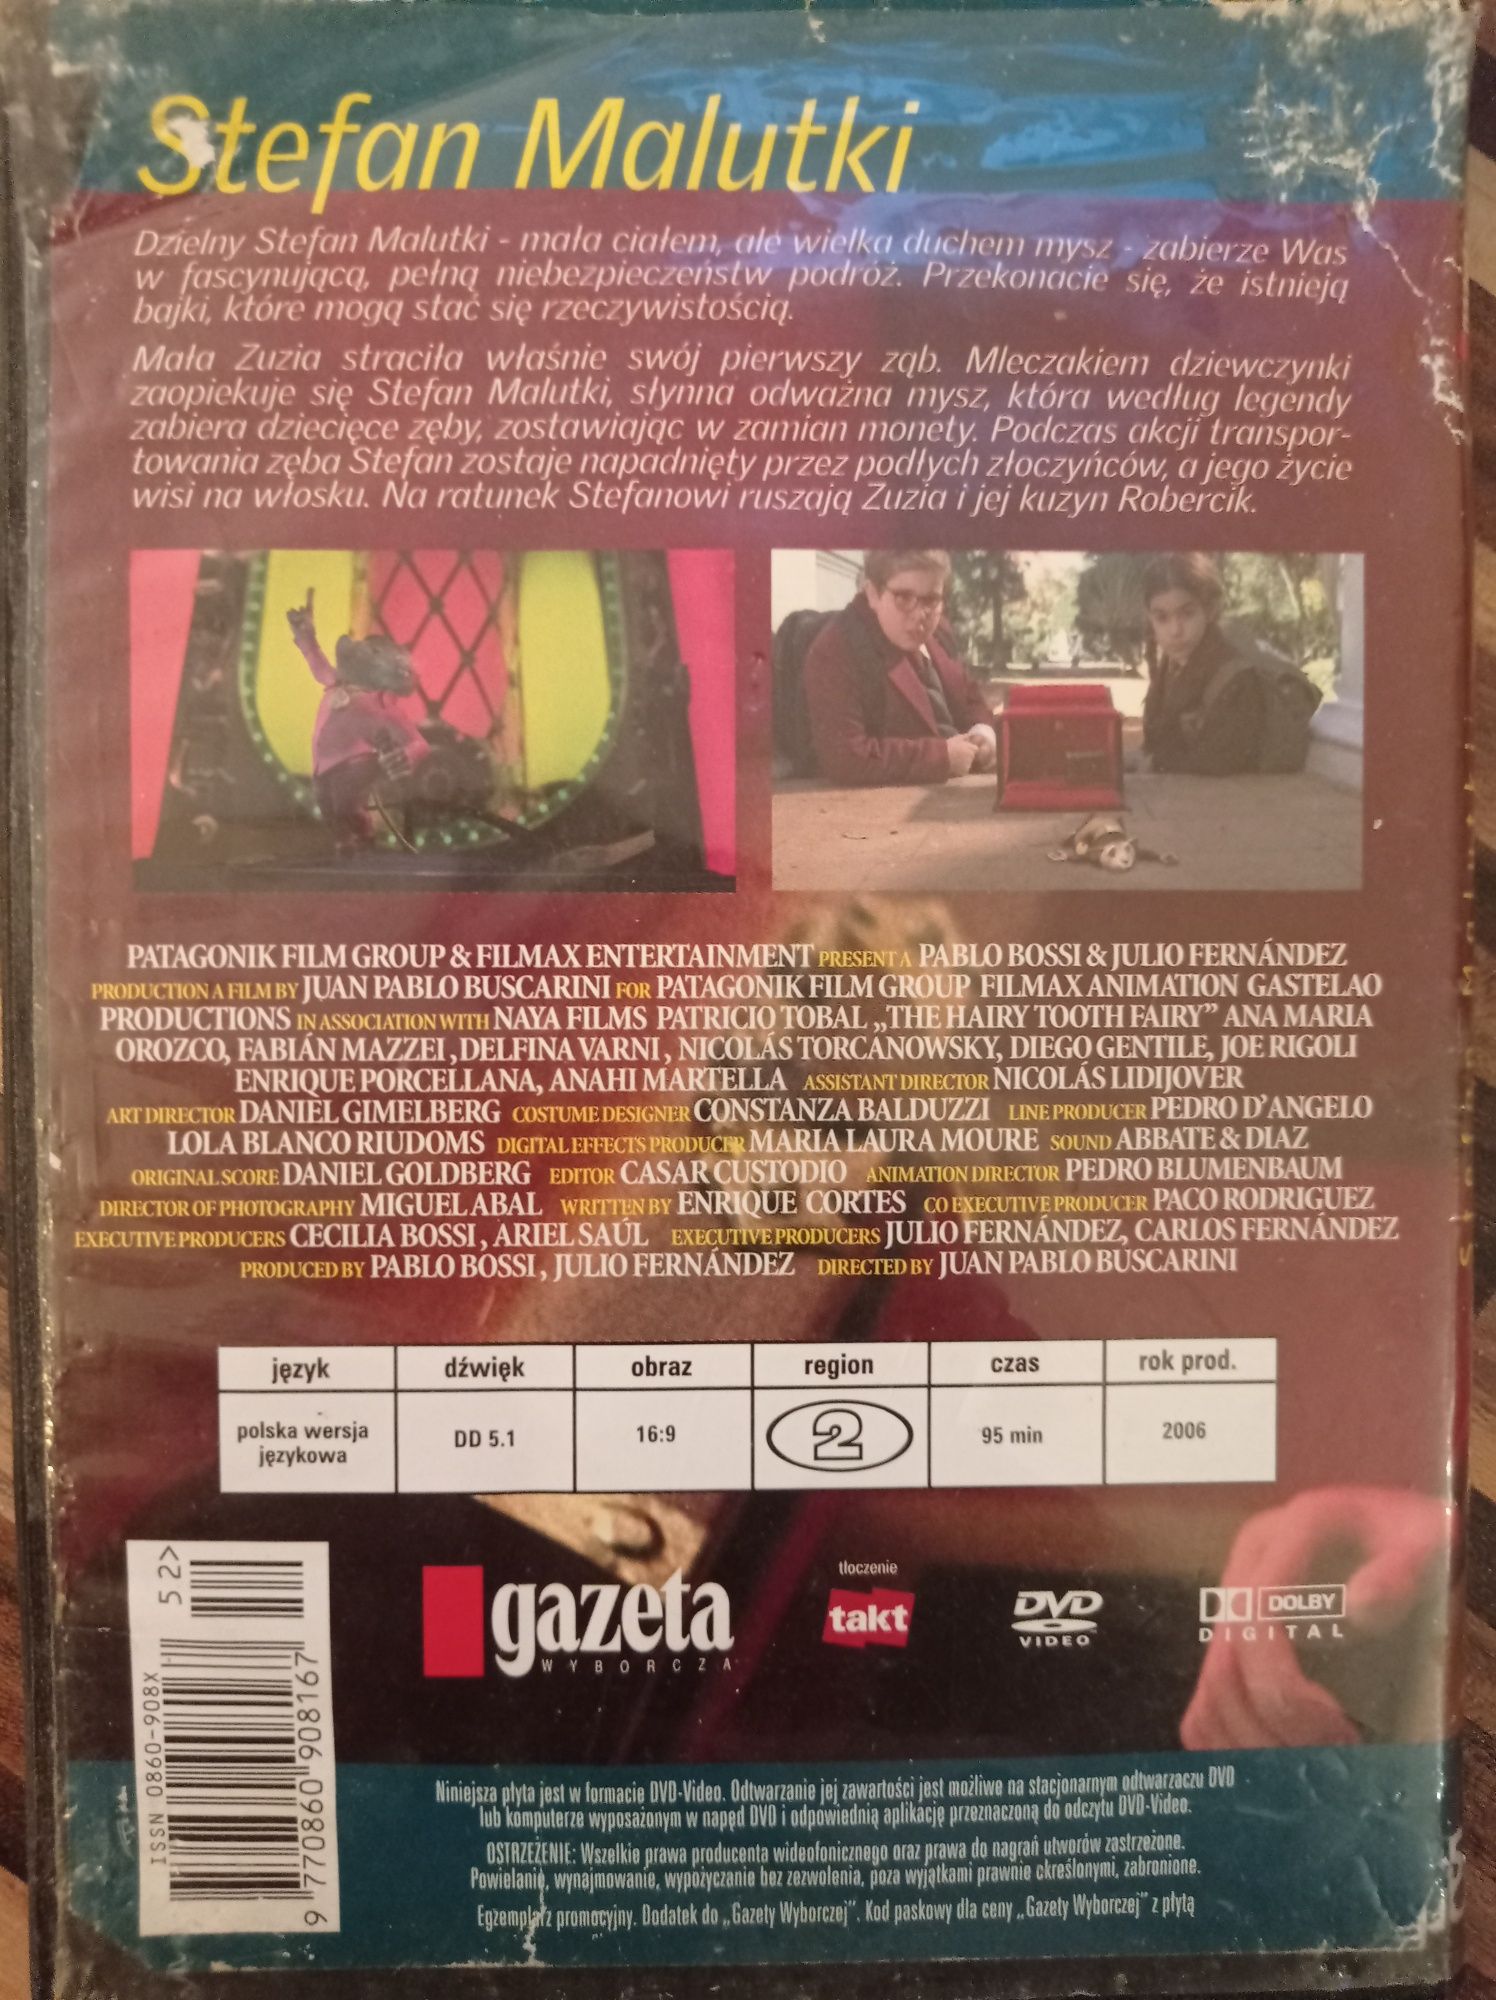 Kino familijne Stefan Malutki dvd